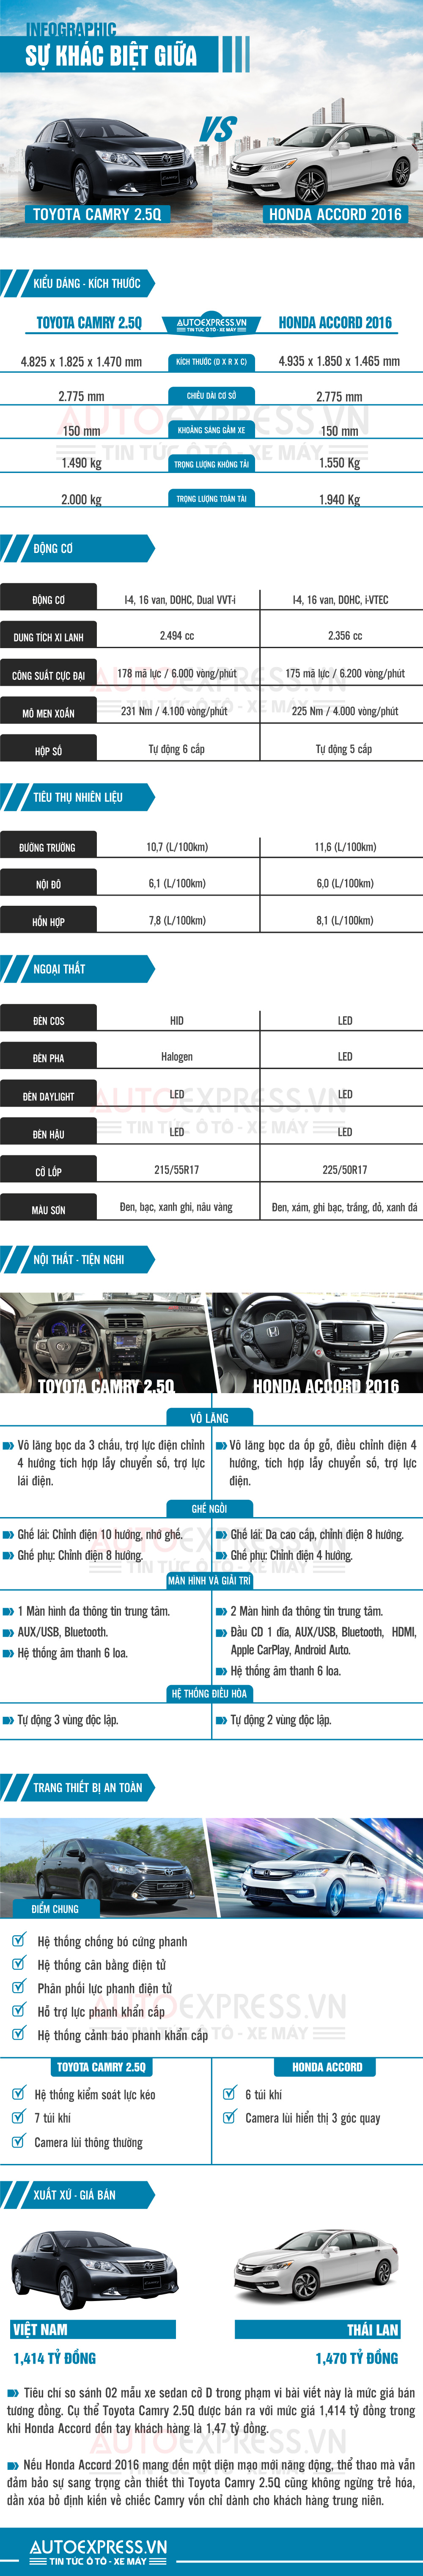 So-sanh-Toyota-Camry-Honda-Accord-infographic-2